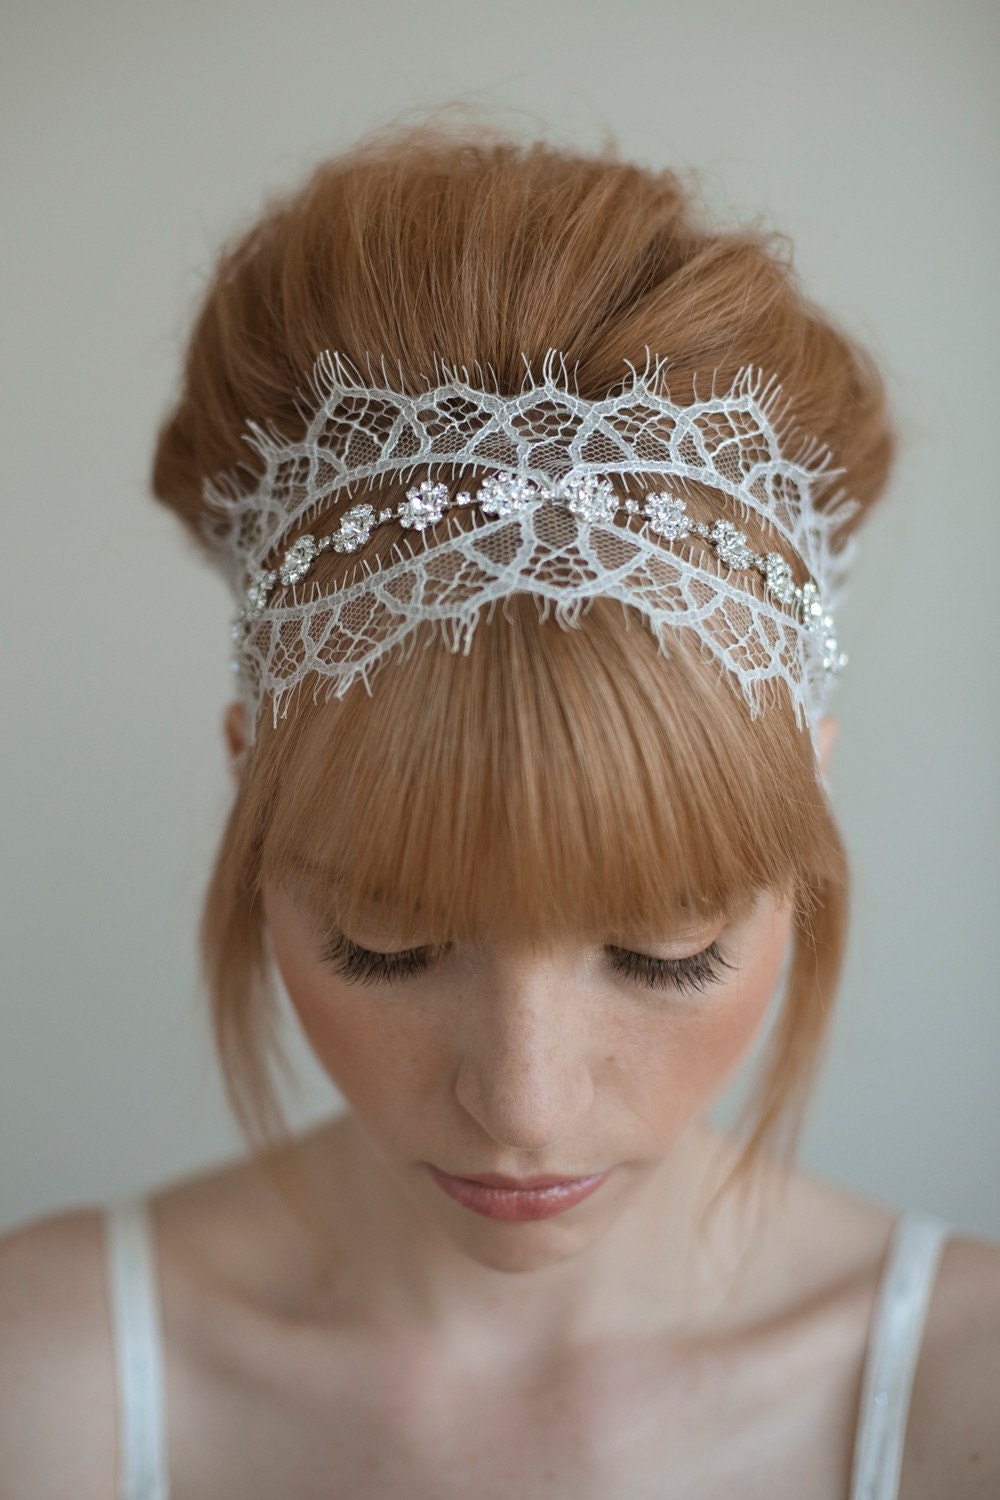 Wedding headband, bridal hair piece, lace, crystals - Chantilly and rhinestone self tie headband - Style 016 - Made to Order